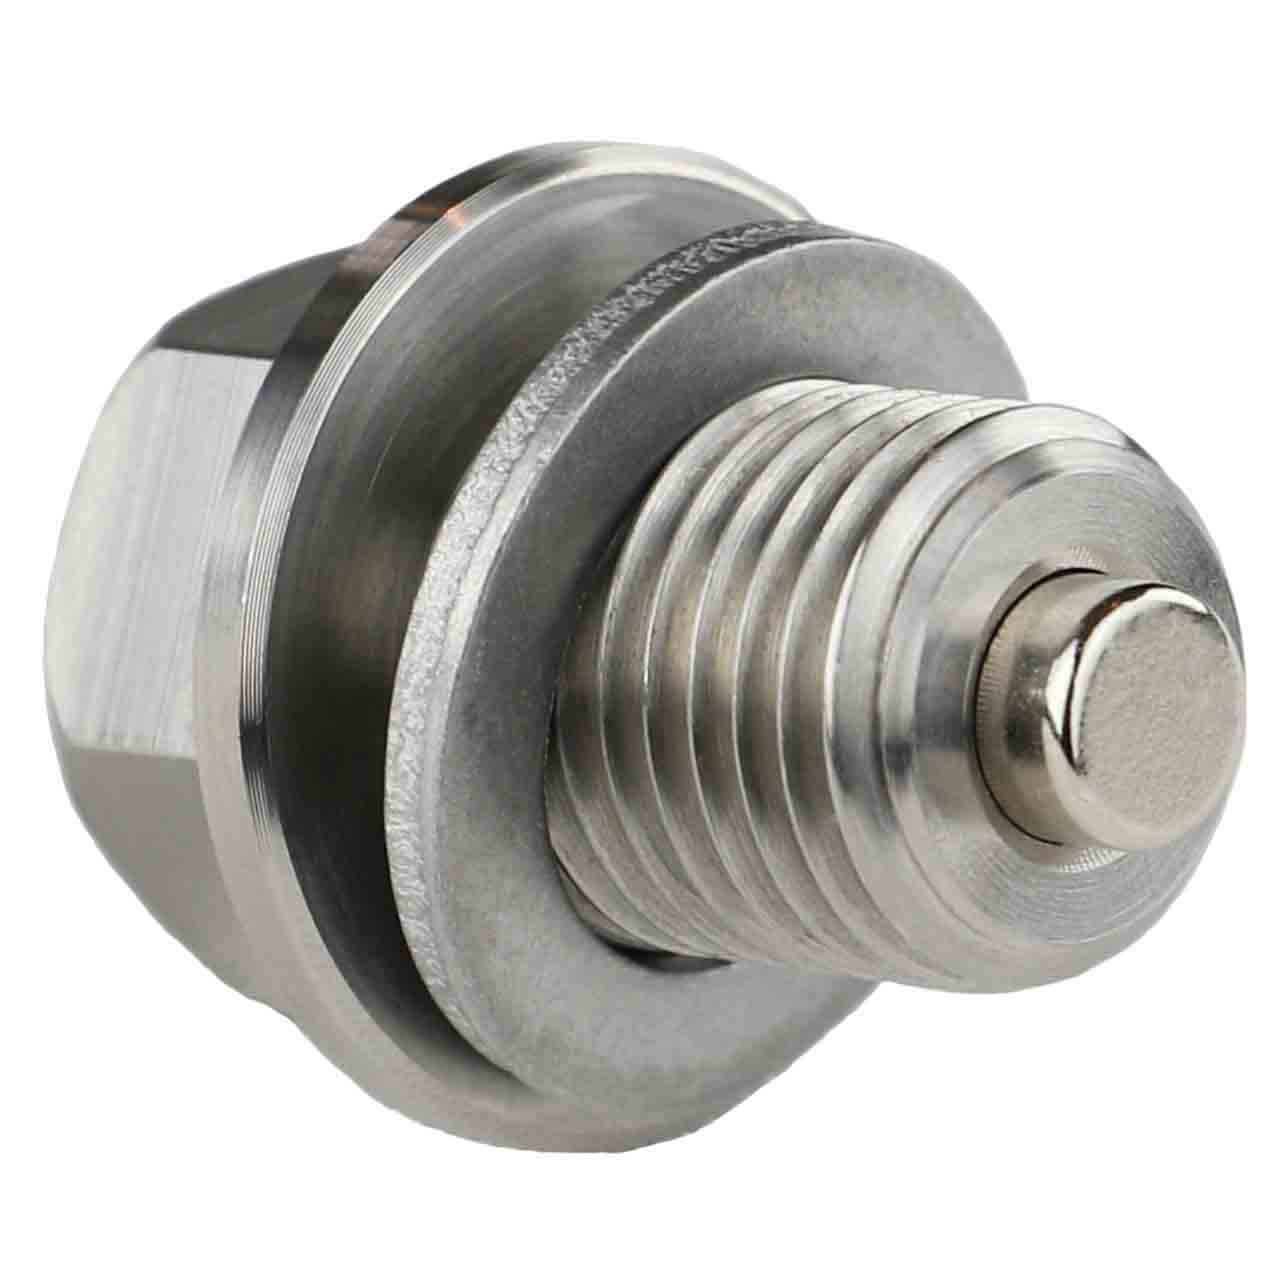 Suzuki Aerio Magnetic Oil Drain Plug - 2002-2003 - 2.0 Liter - 4 Cylinder - Made In USA - Stainless Steel - Part Number 09247-14044